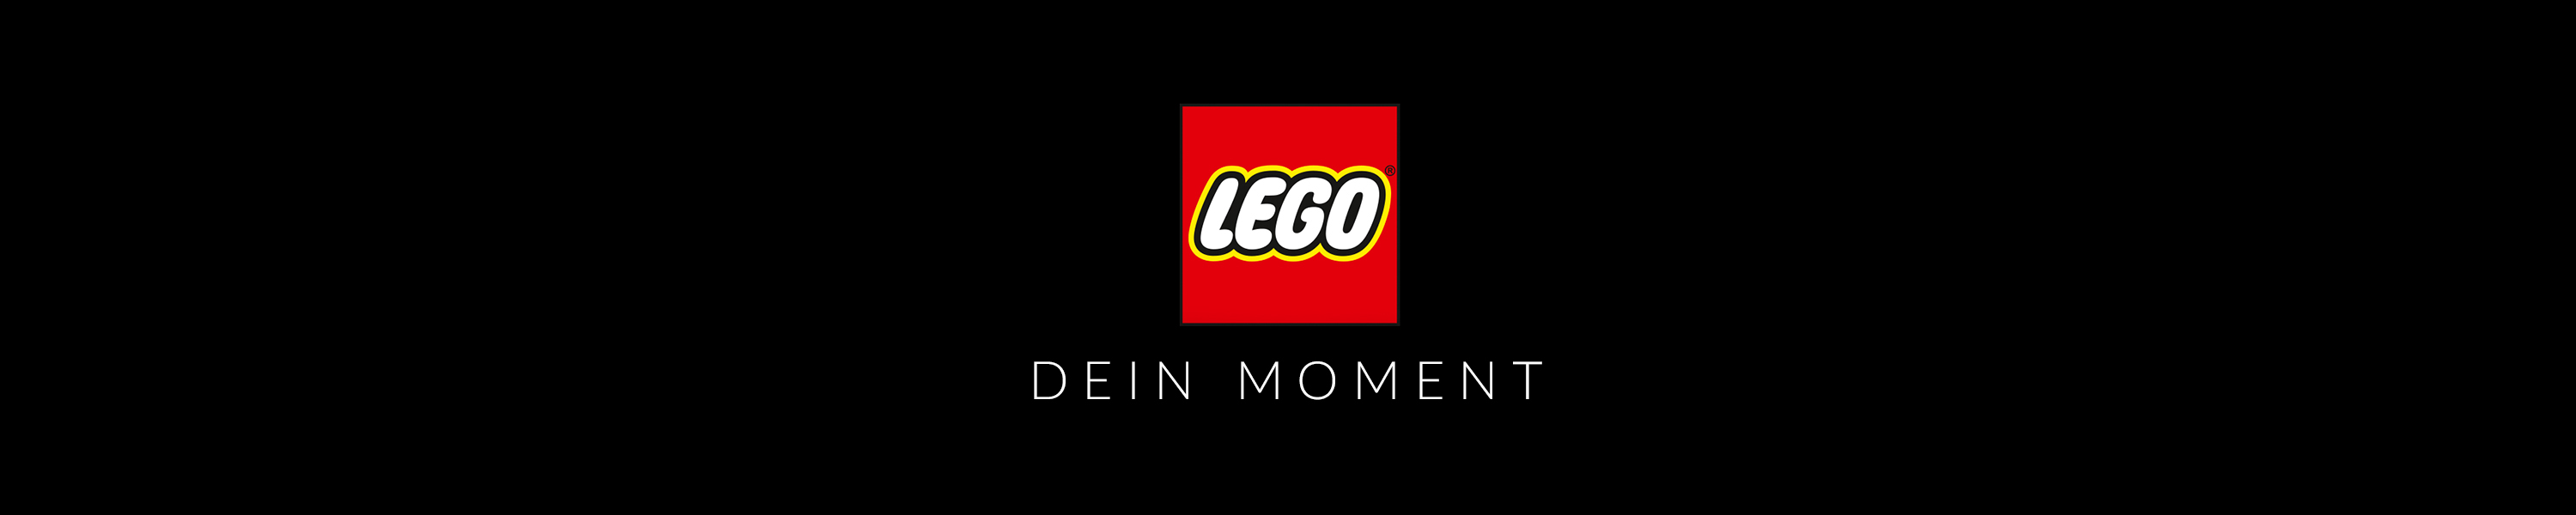 Lego-Banner